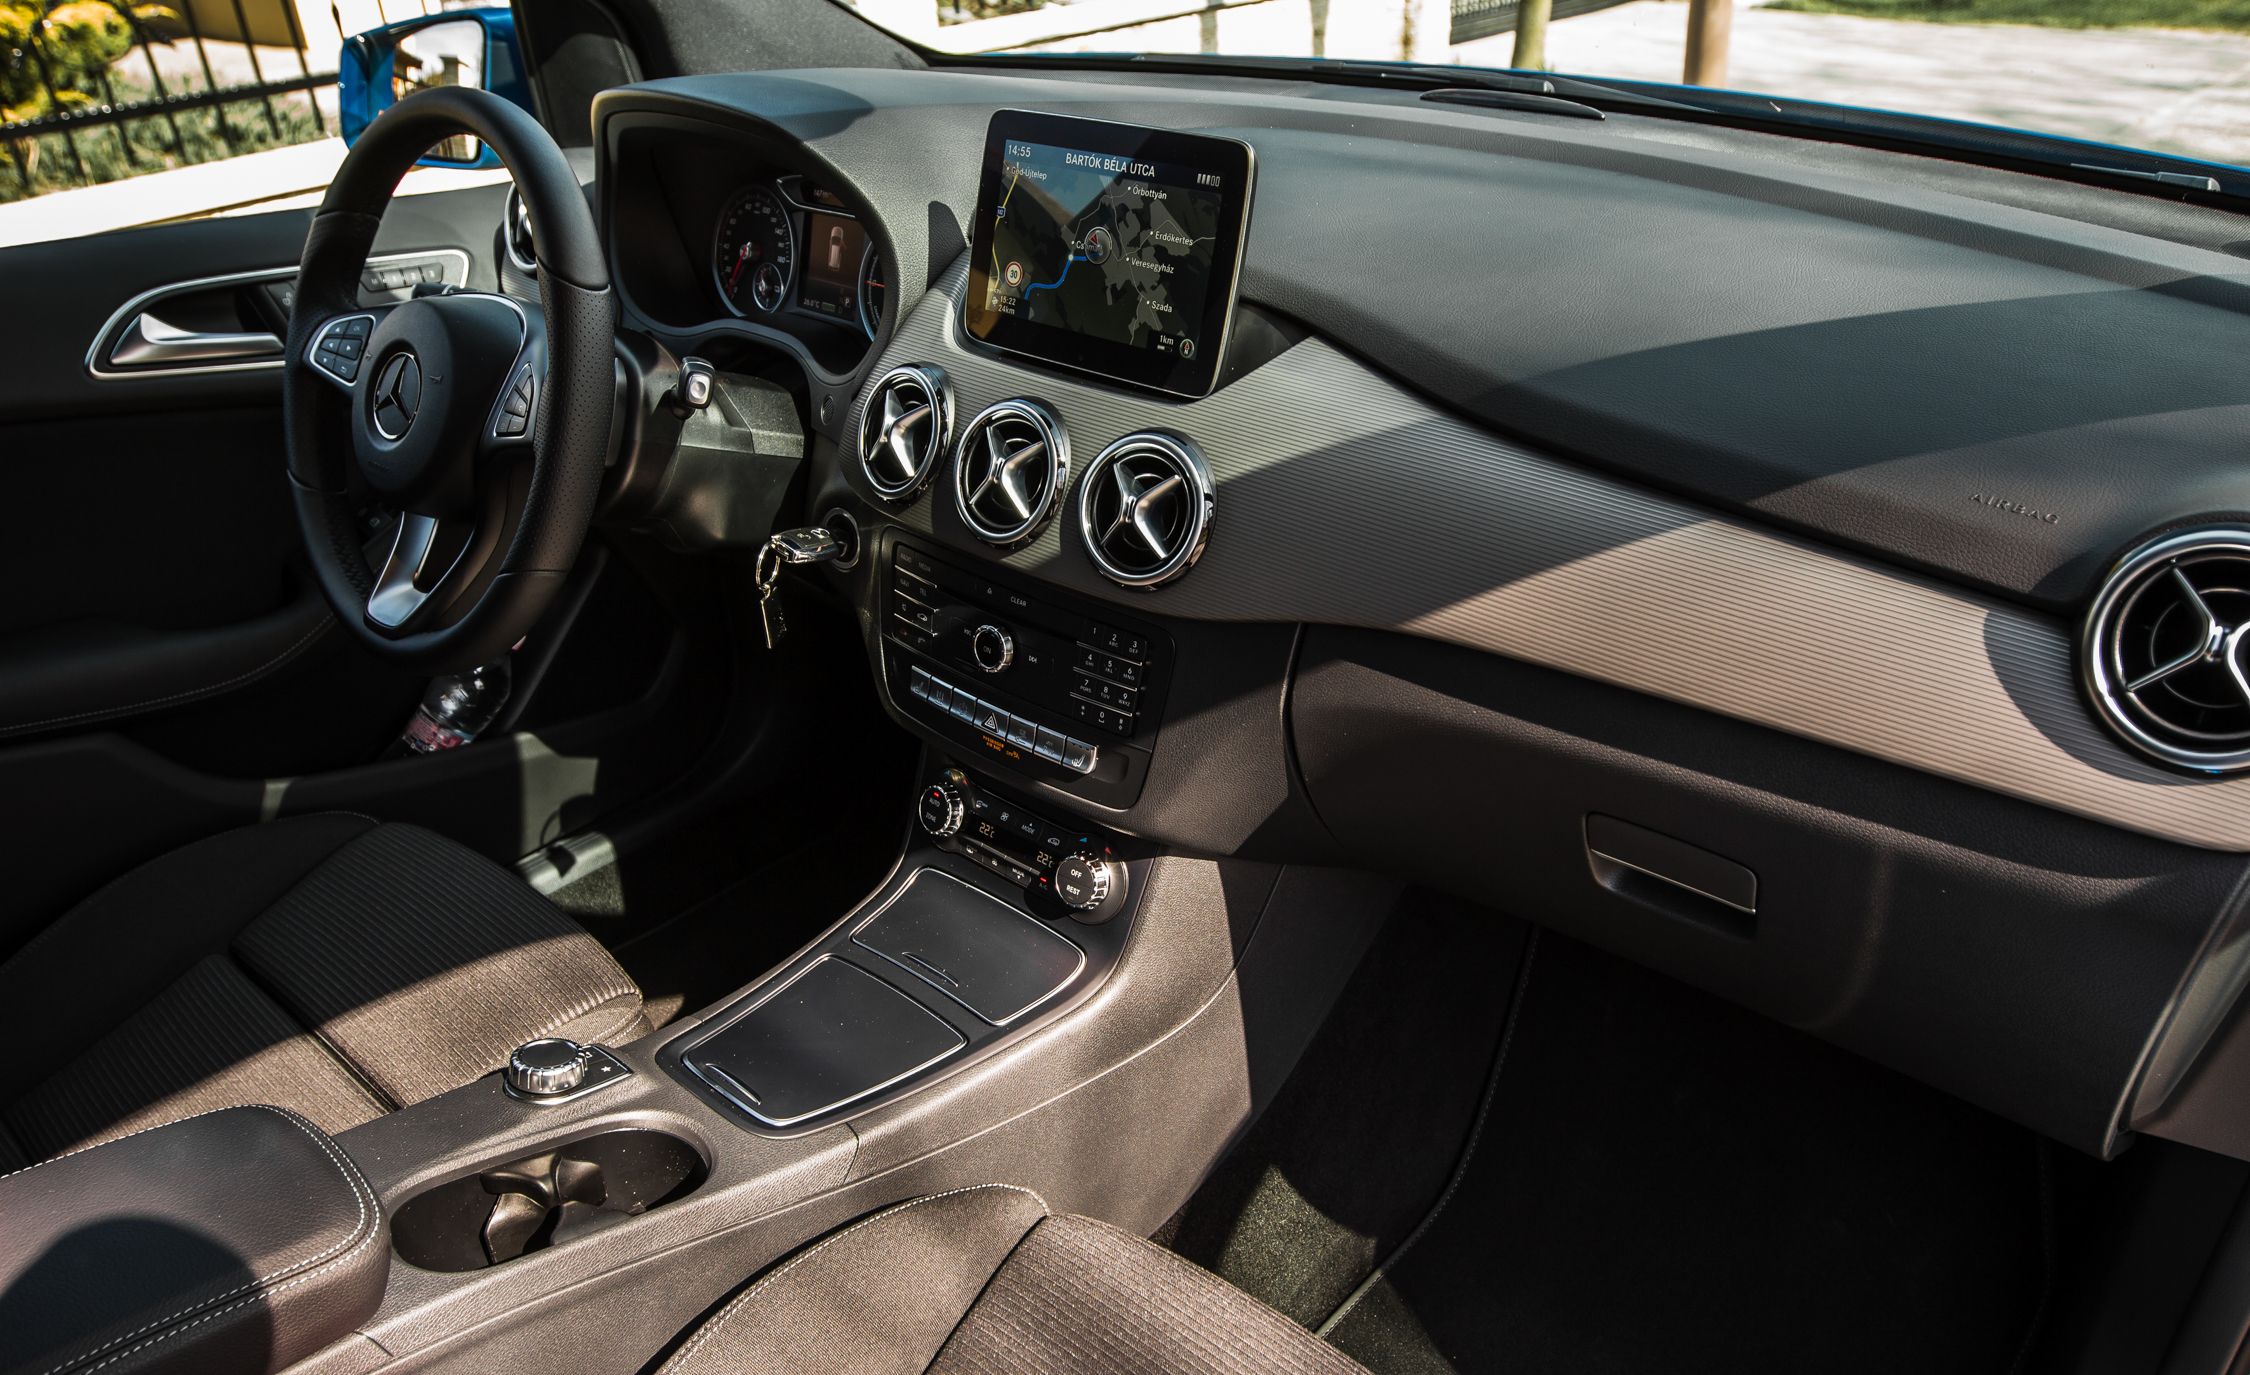 2017 Mercedes Benz B250e Interior Dashboard And Center Screen (View 8 of 24)